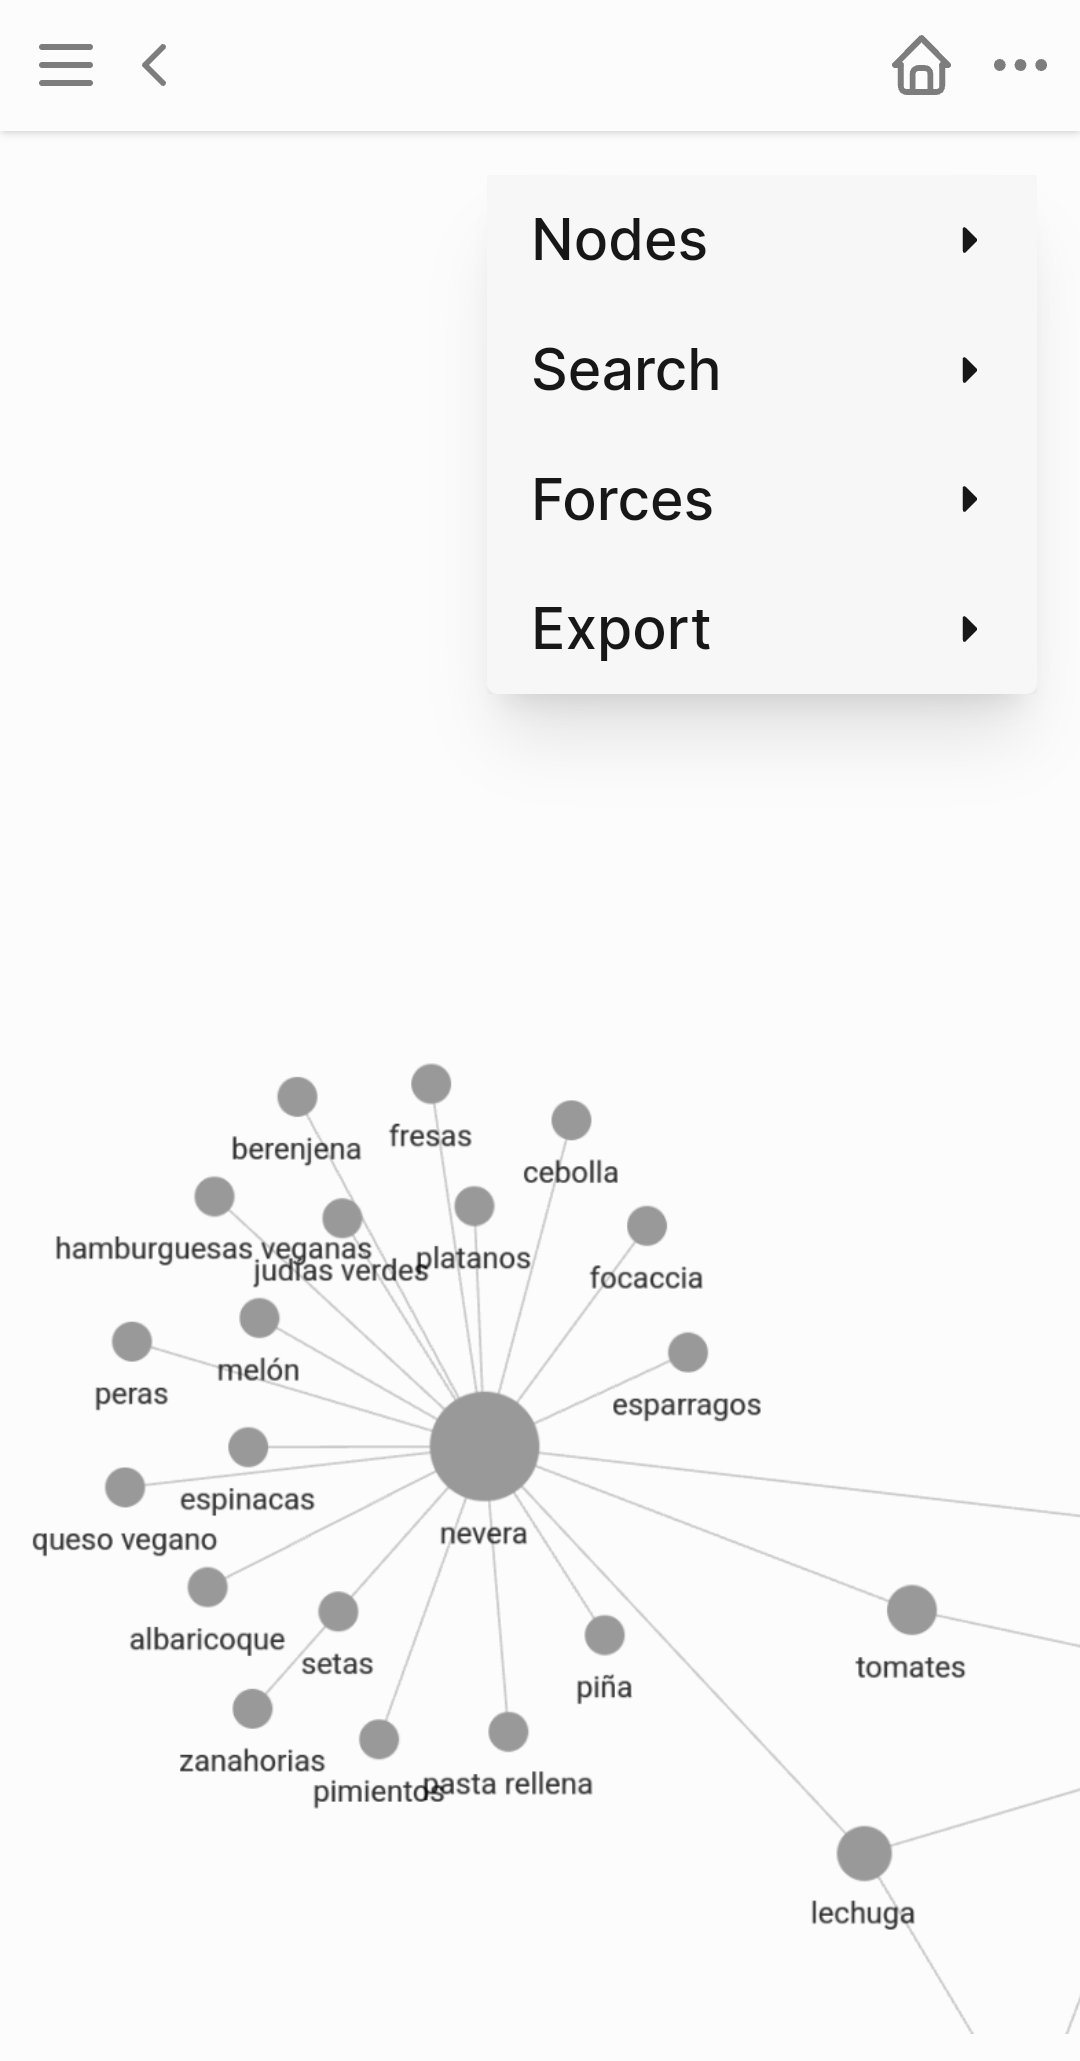 imagen de un grafo donde se ve un nodo con la etiqueta de nevera que está conectado a otros que son alimentos